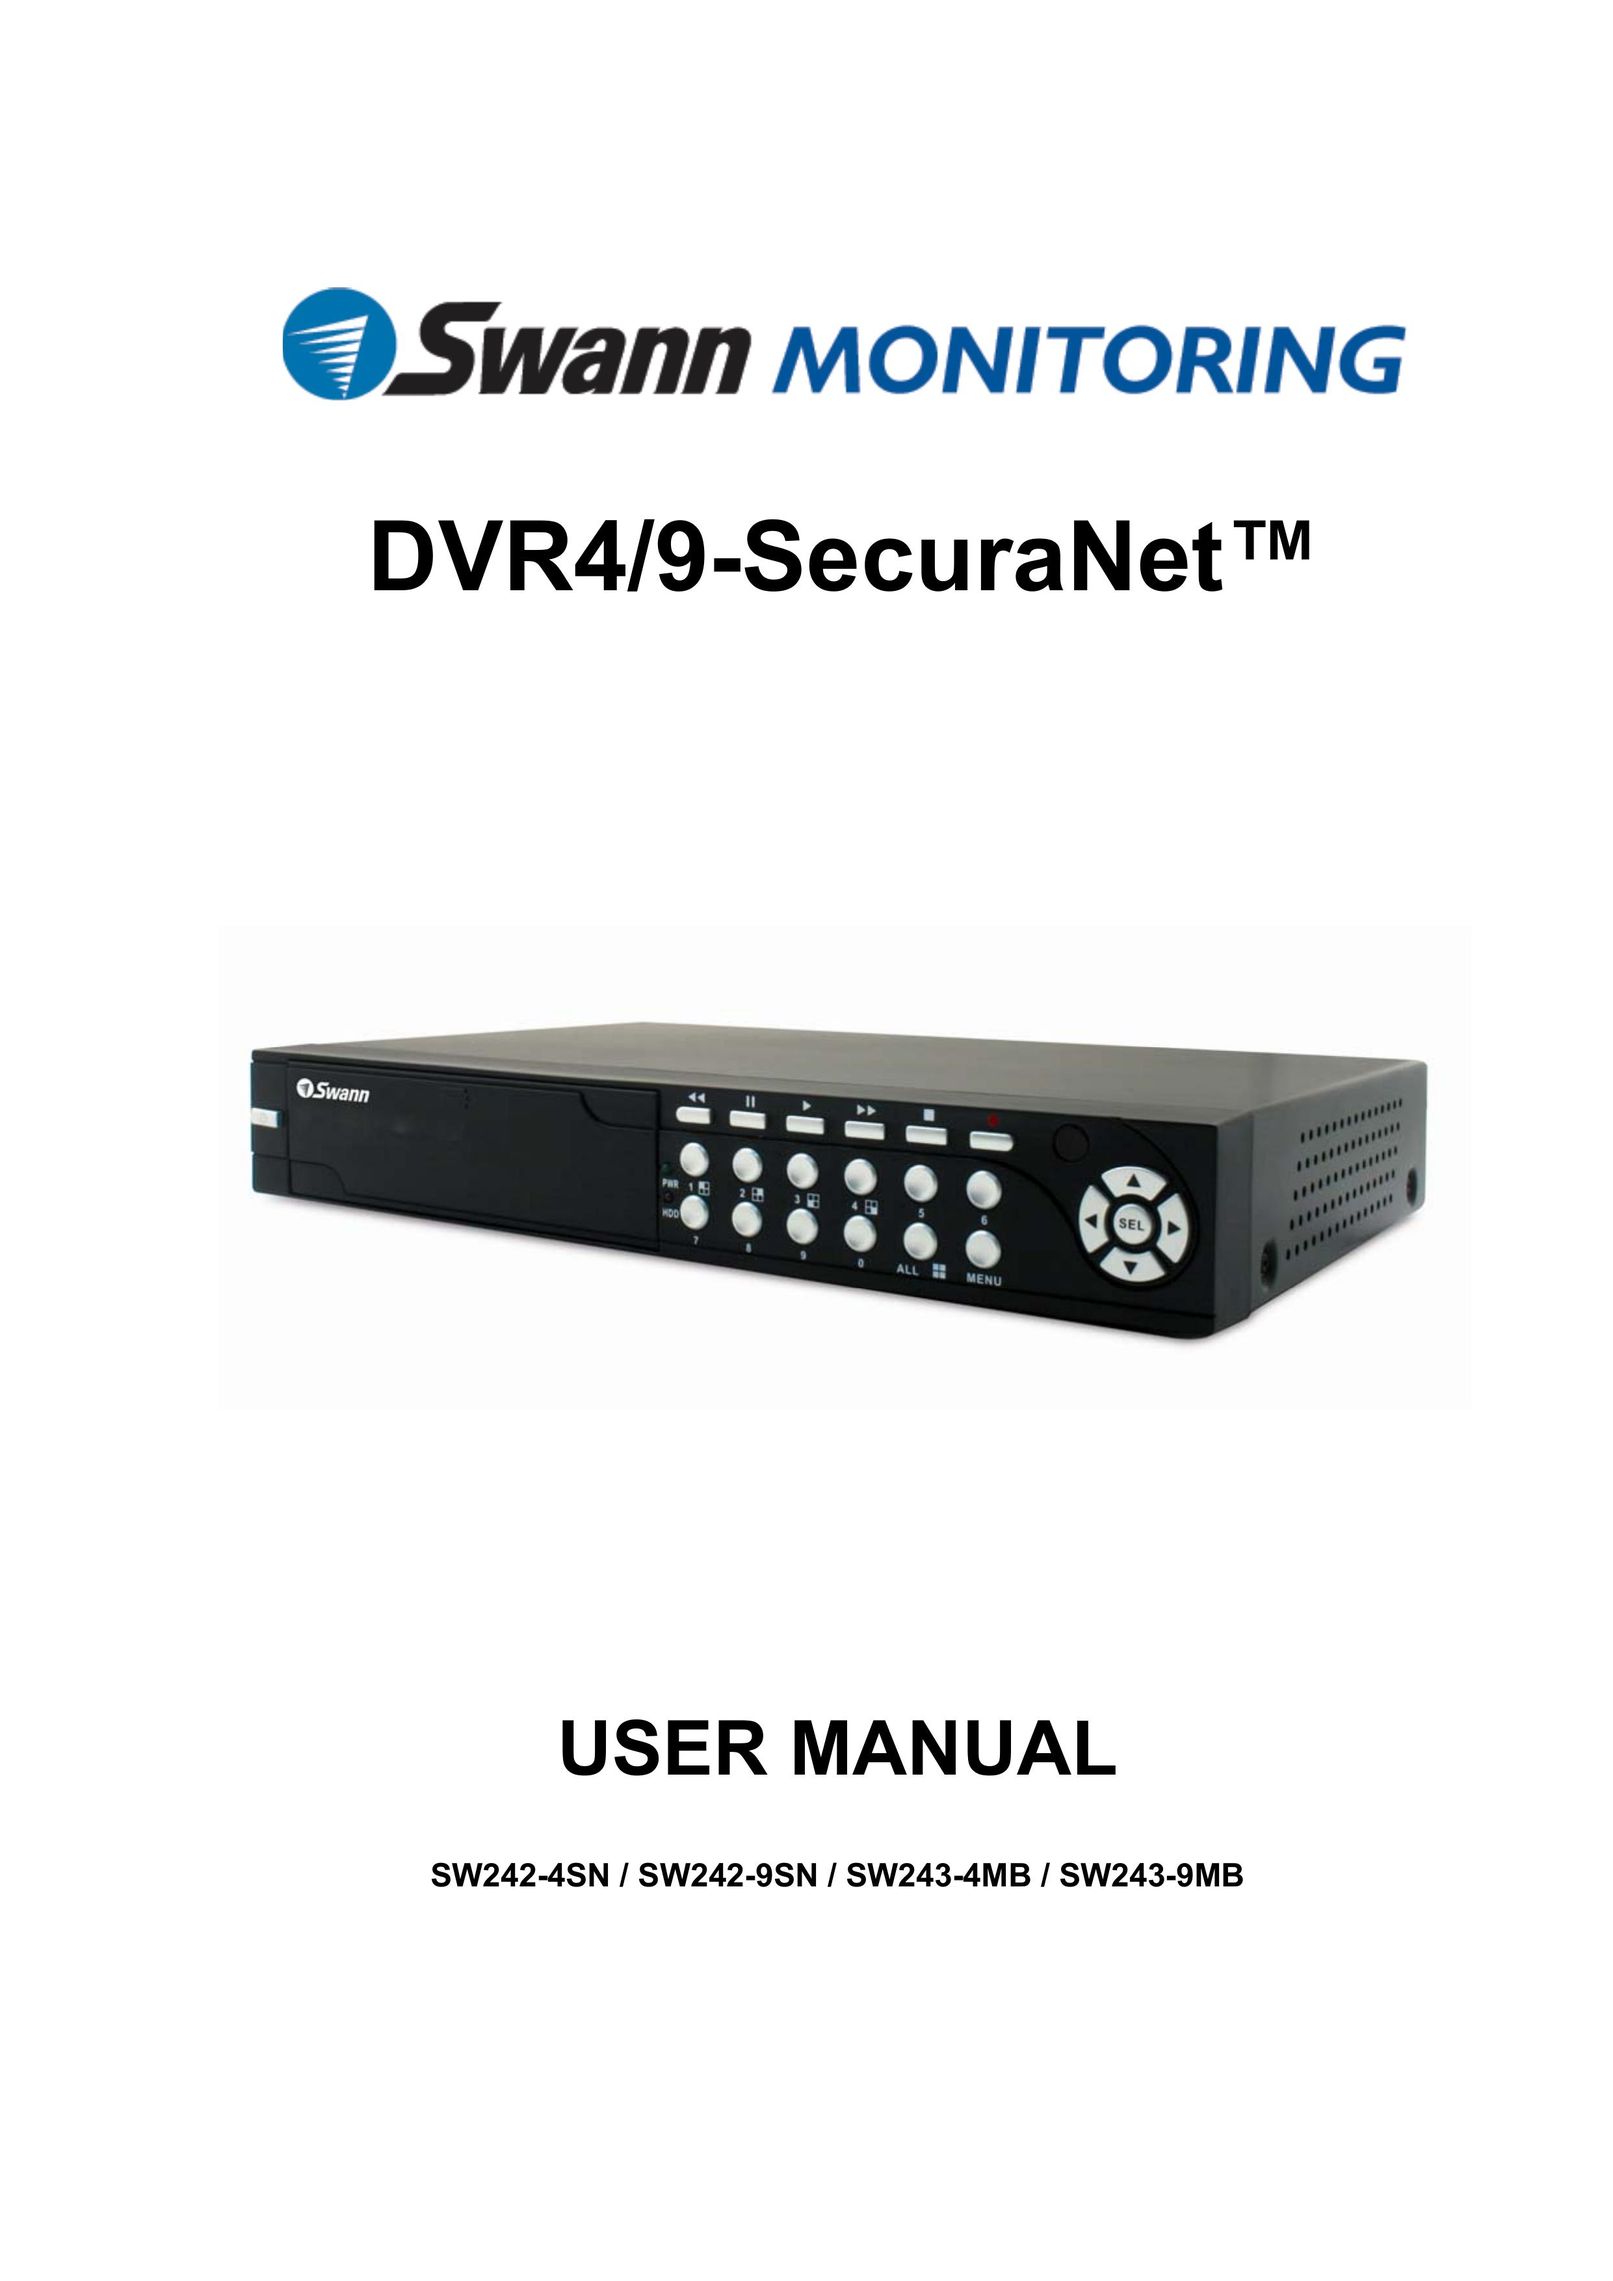 Swann SW243-9MB DVR User Manual